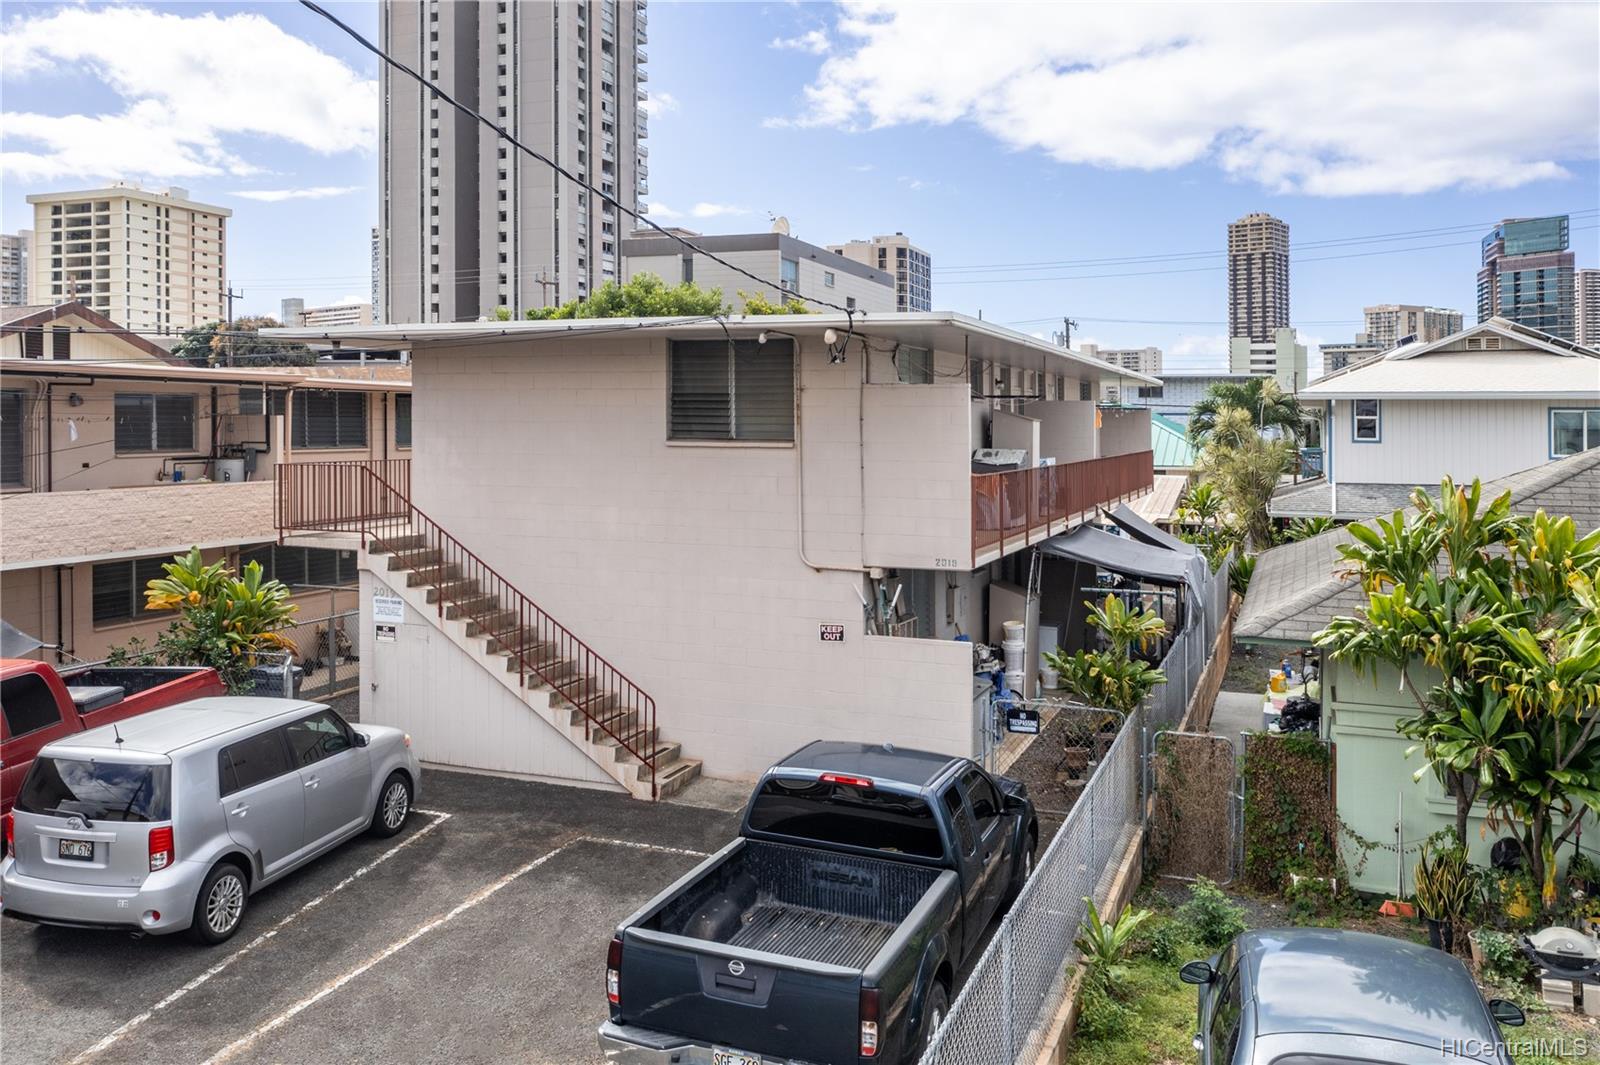 2019 Waiola Street Honolulu, HI 96826